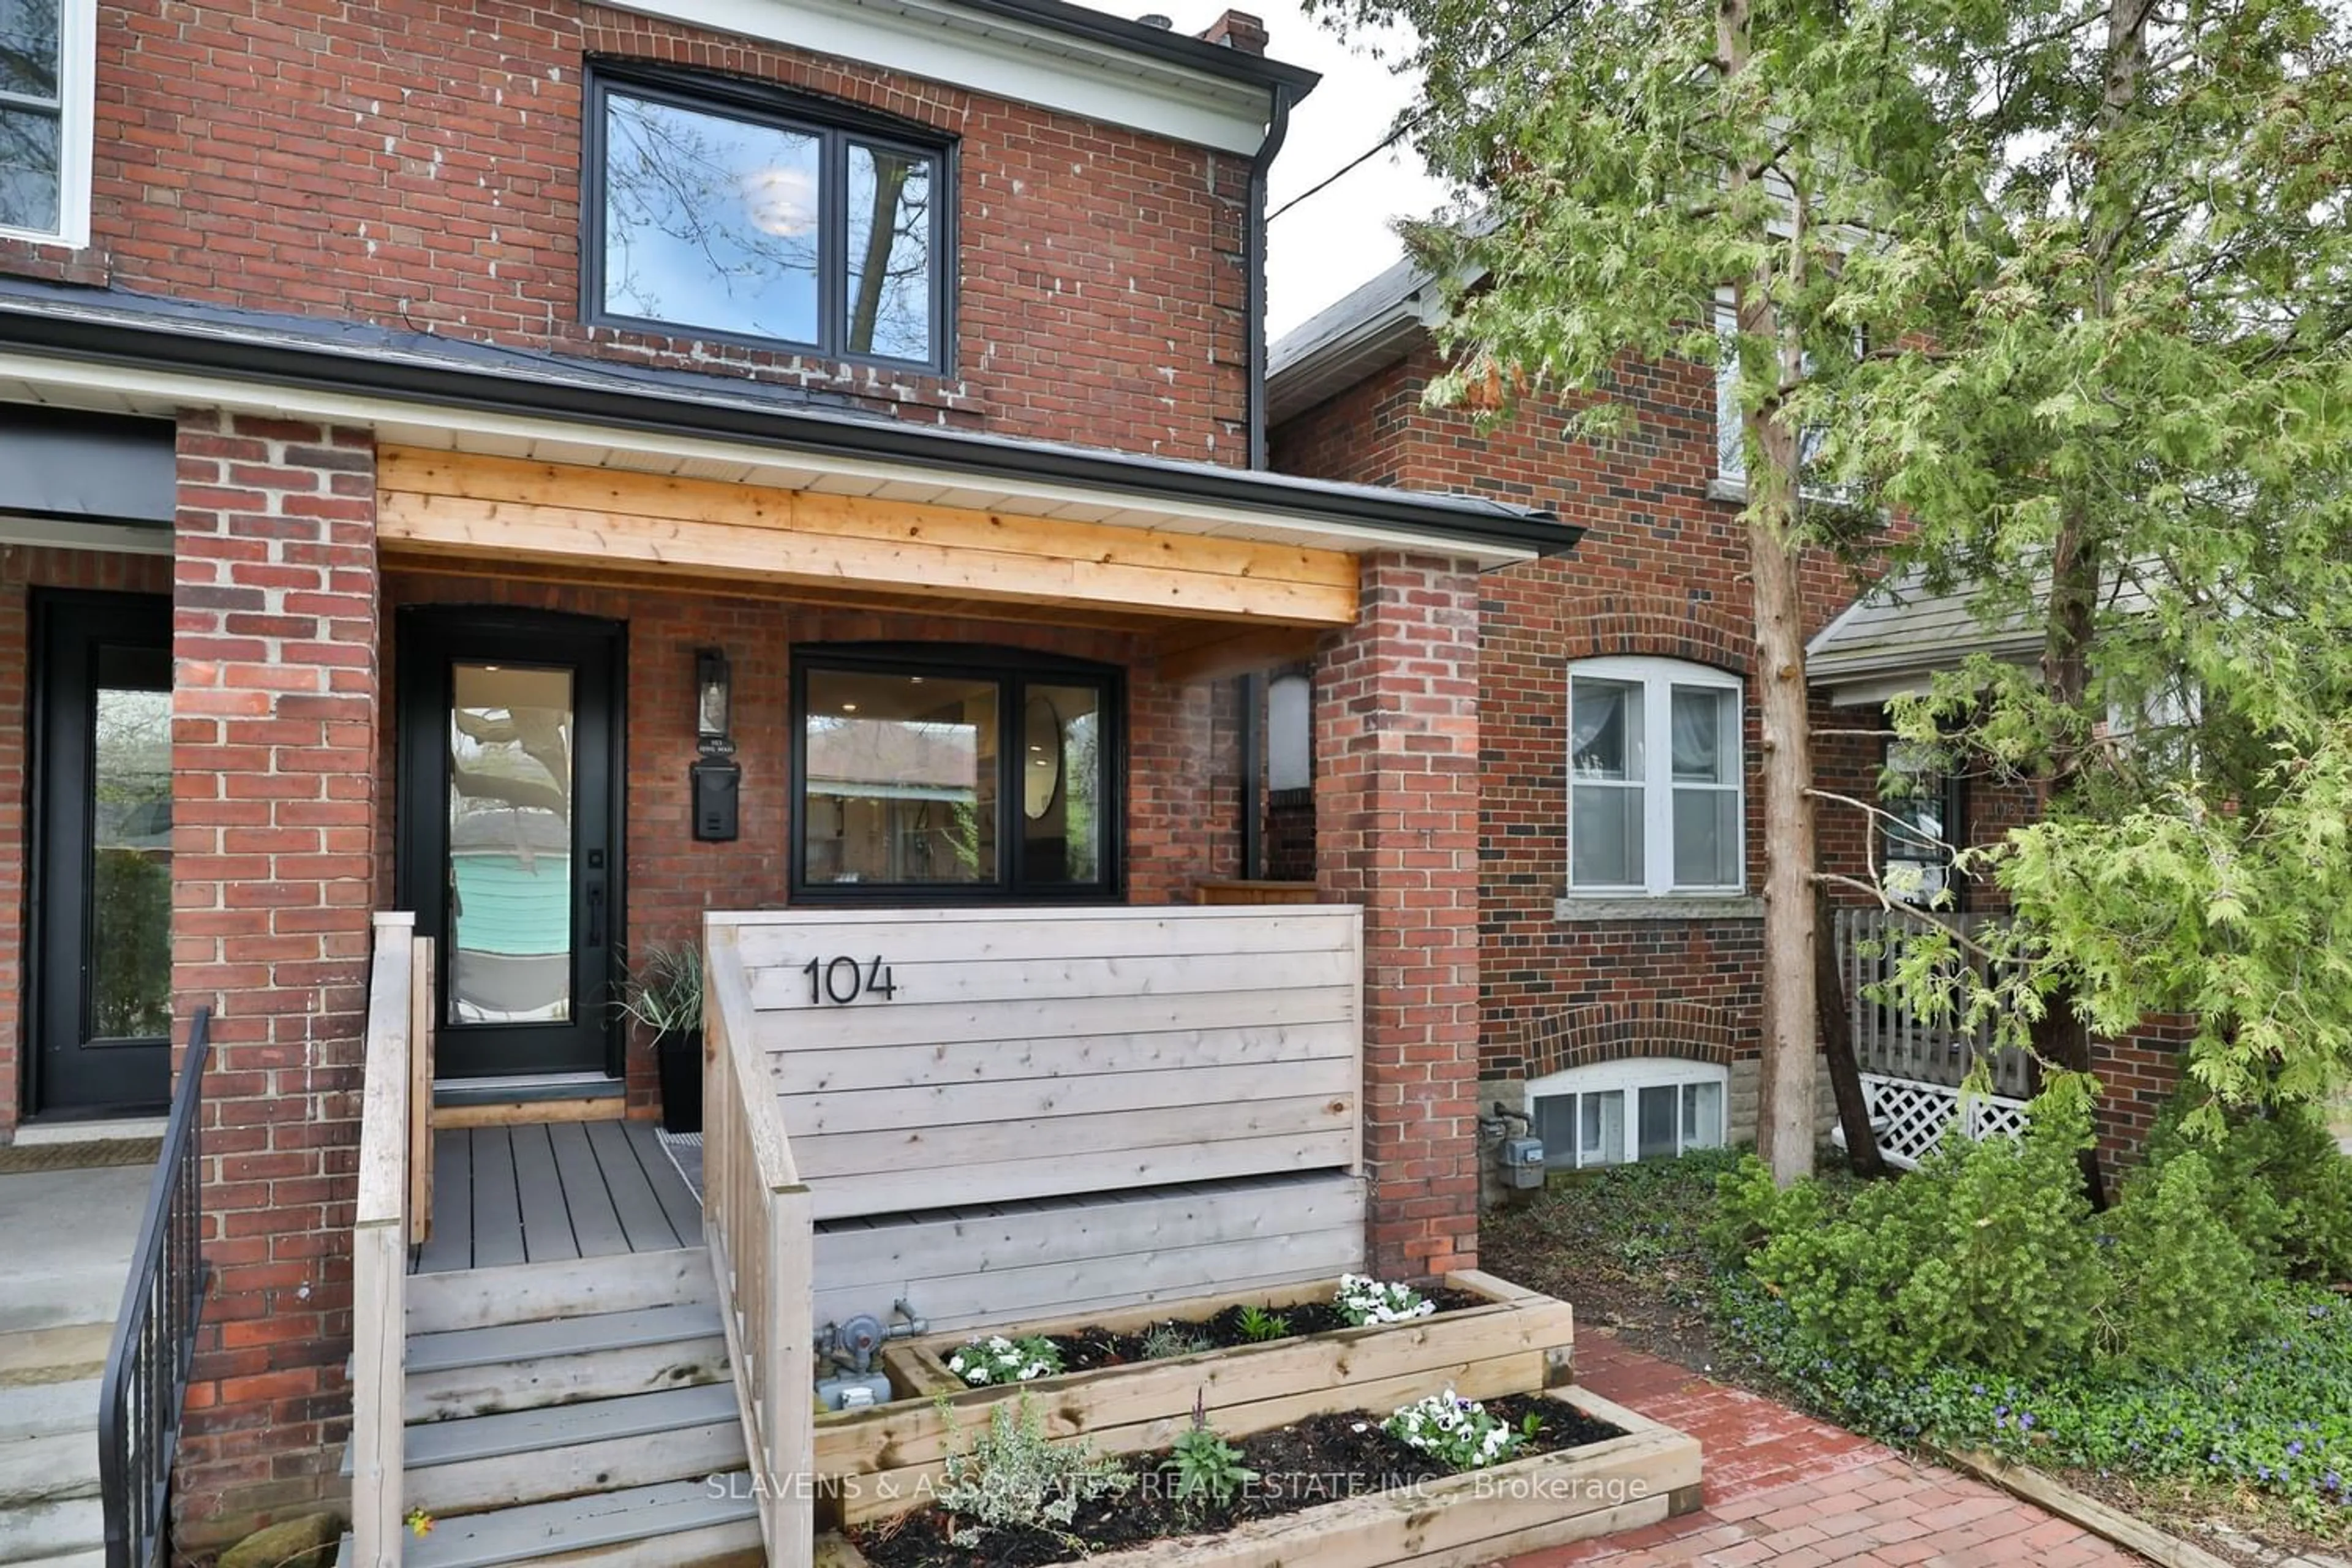 Home with brick exterior material for 104 Alameda Ave, Toronto Ontario M6C 3W7